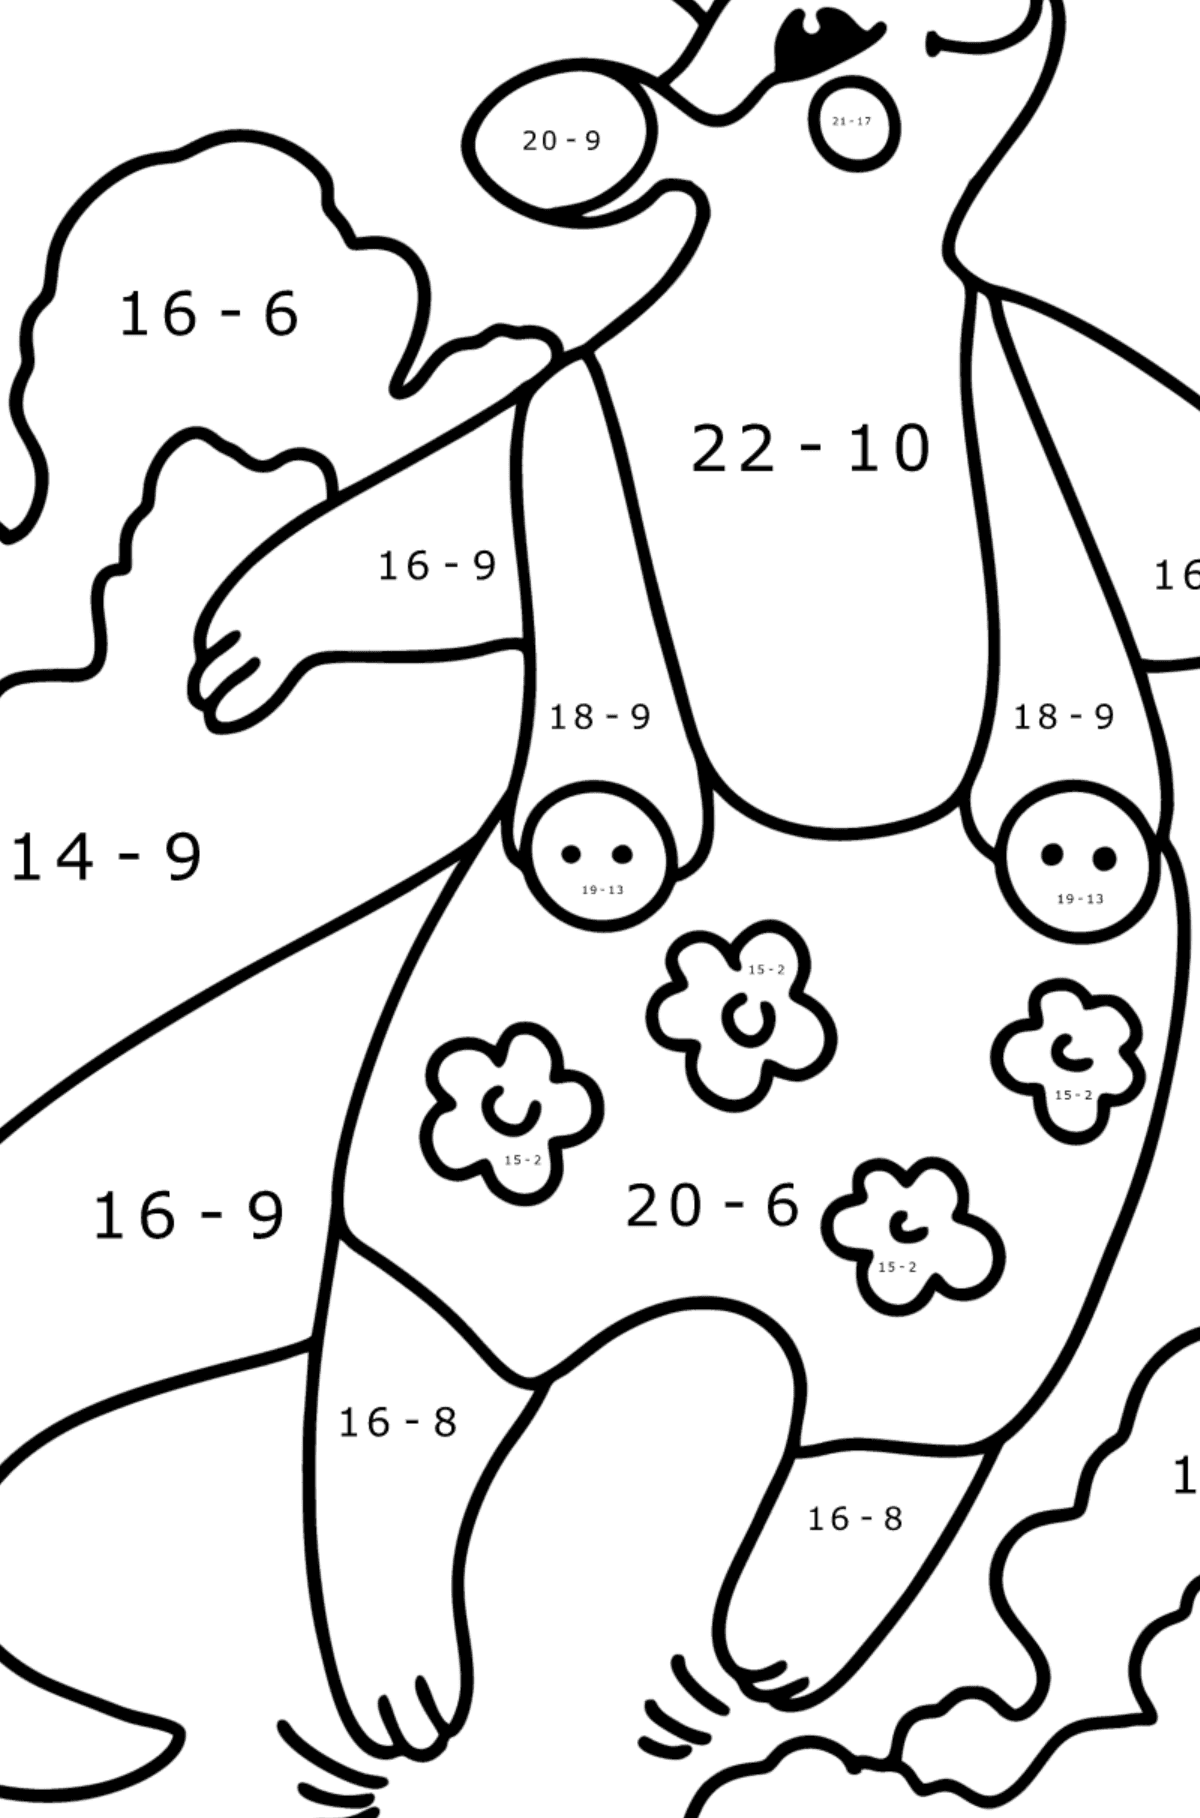 Coloring page - Cartoon Kangaroo jumping - Math Coloring - Subtraction for Kids